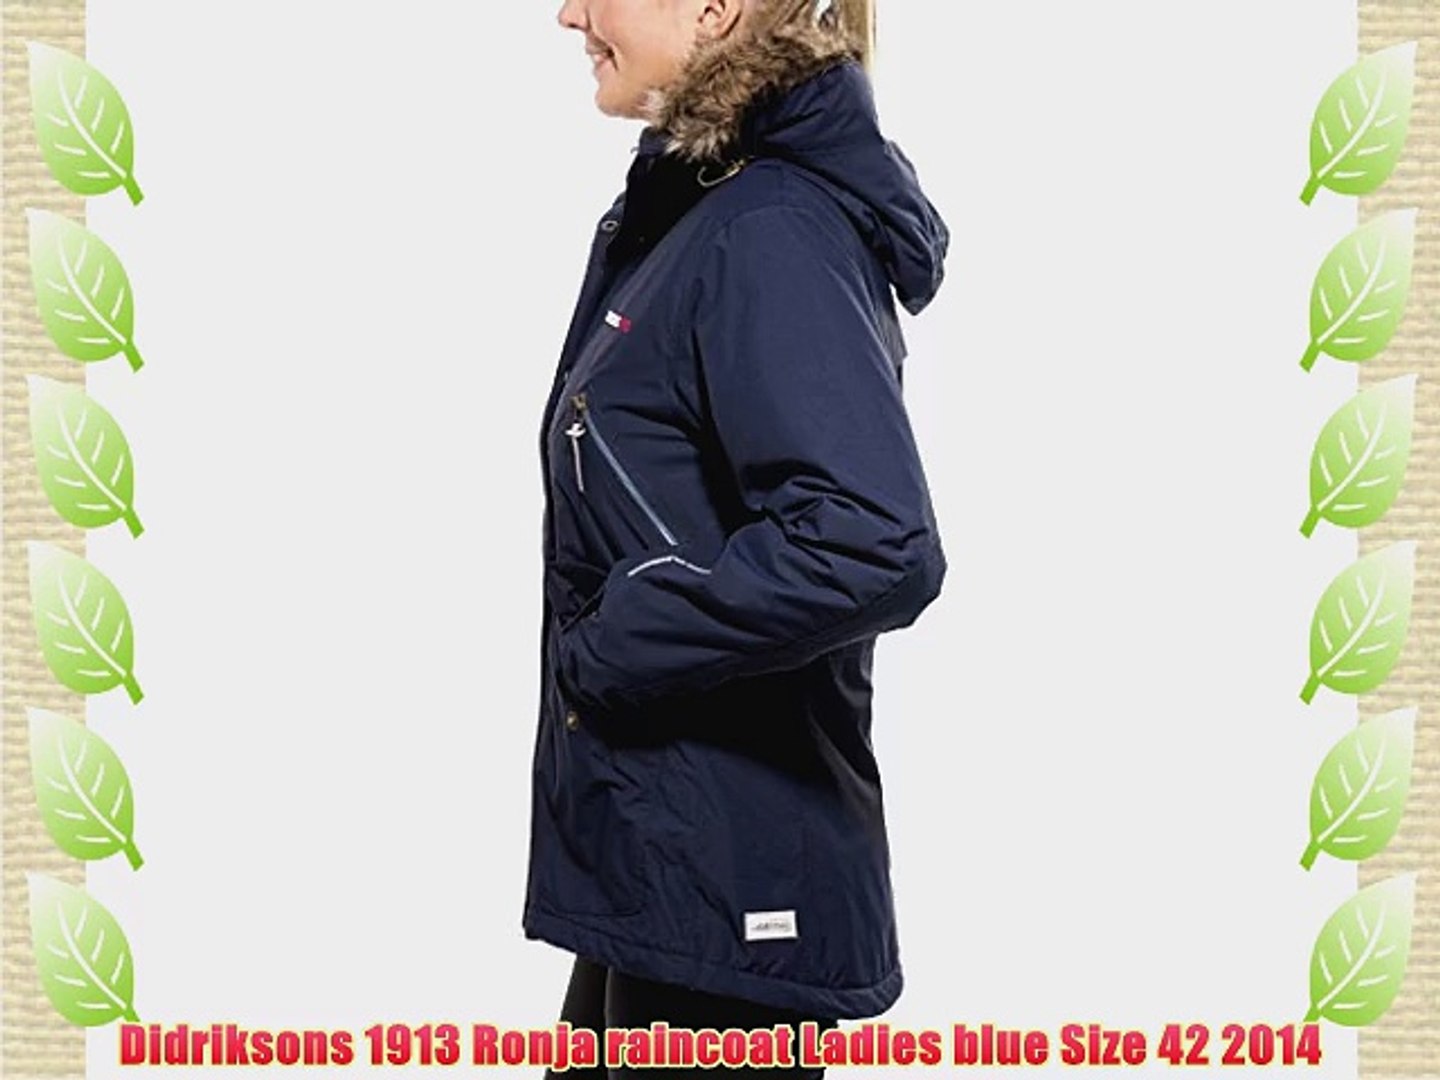 Didriksons 1913 Ronja raincoat Ladies blue Size 42 2014 - video Dailymotion